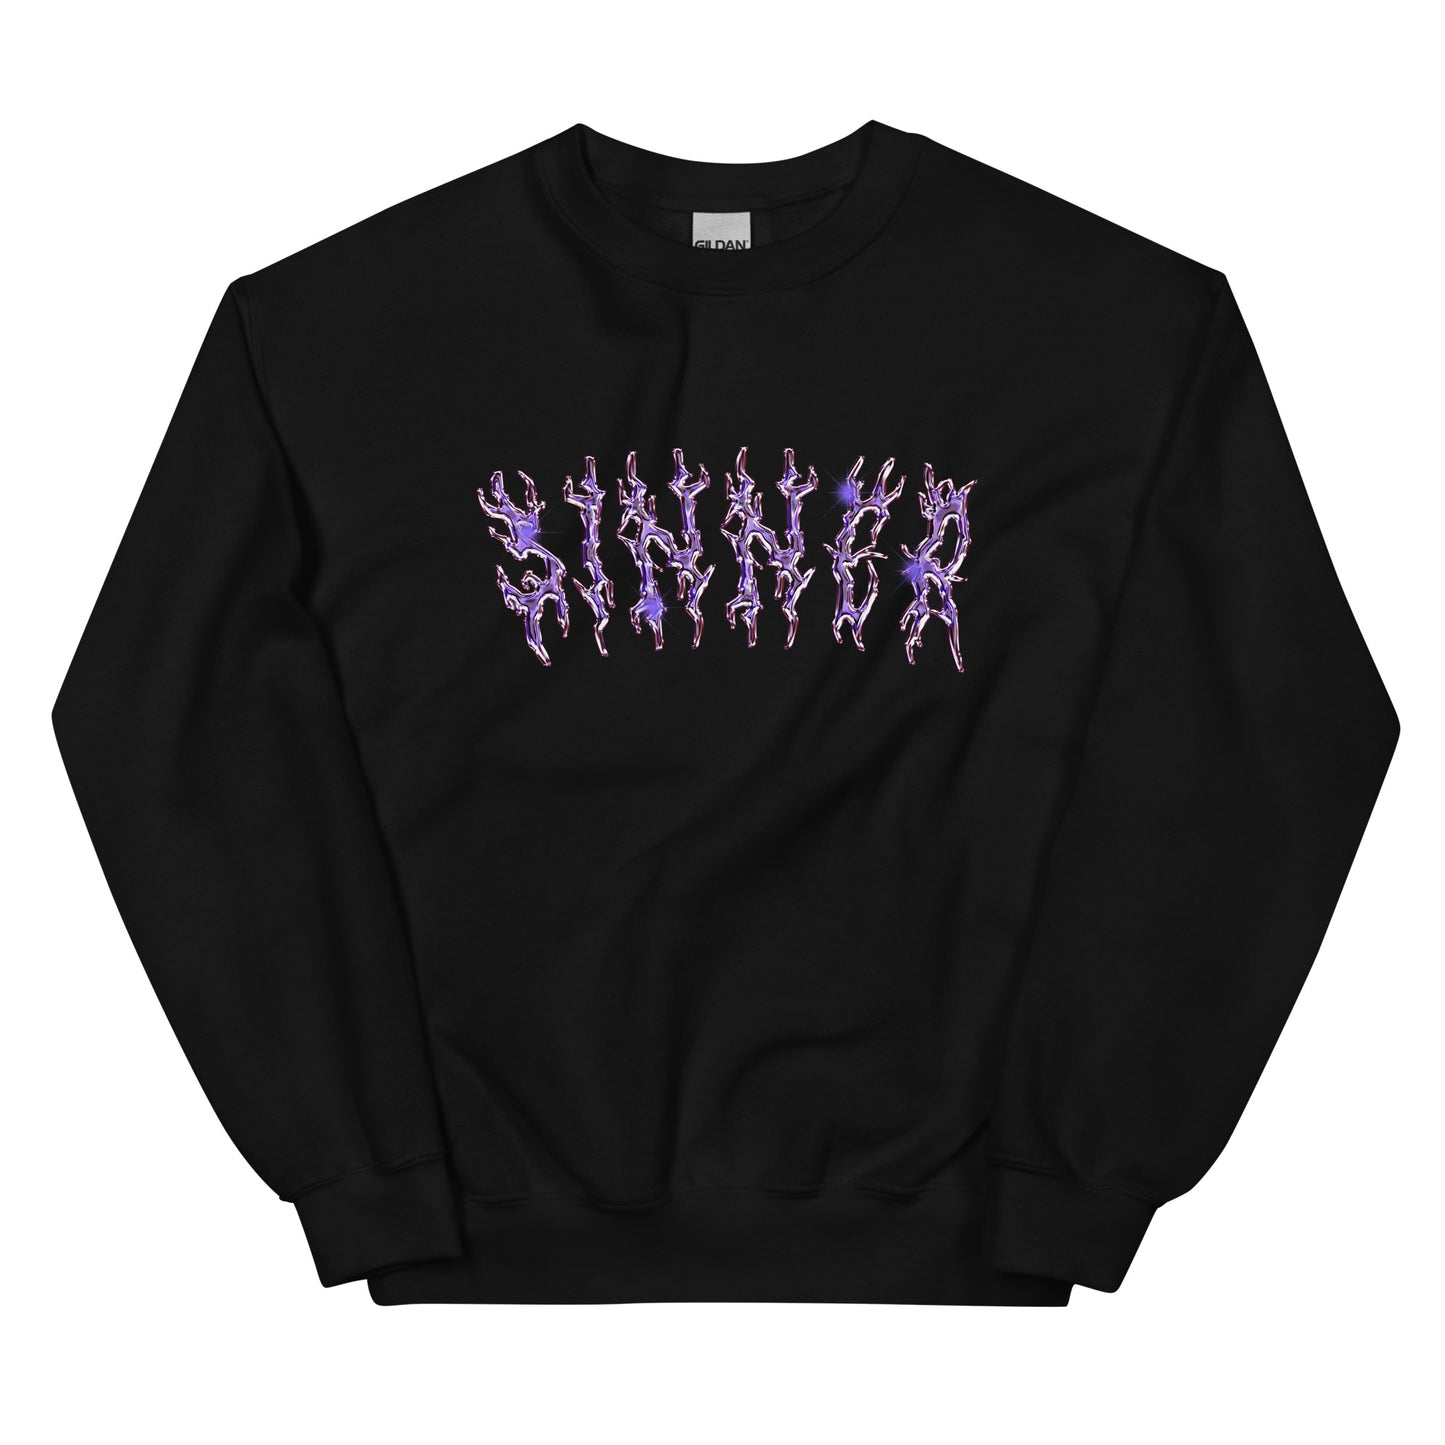 Y2k Clothing Aesthetic Alt Grunge Sweatshirt